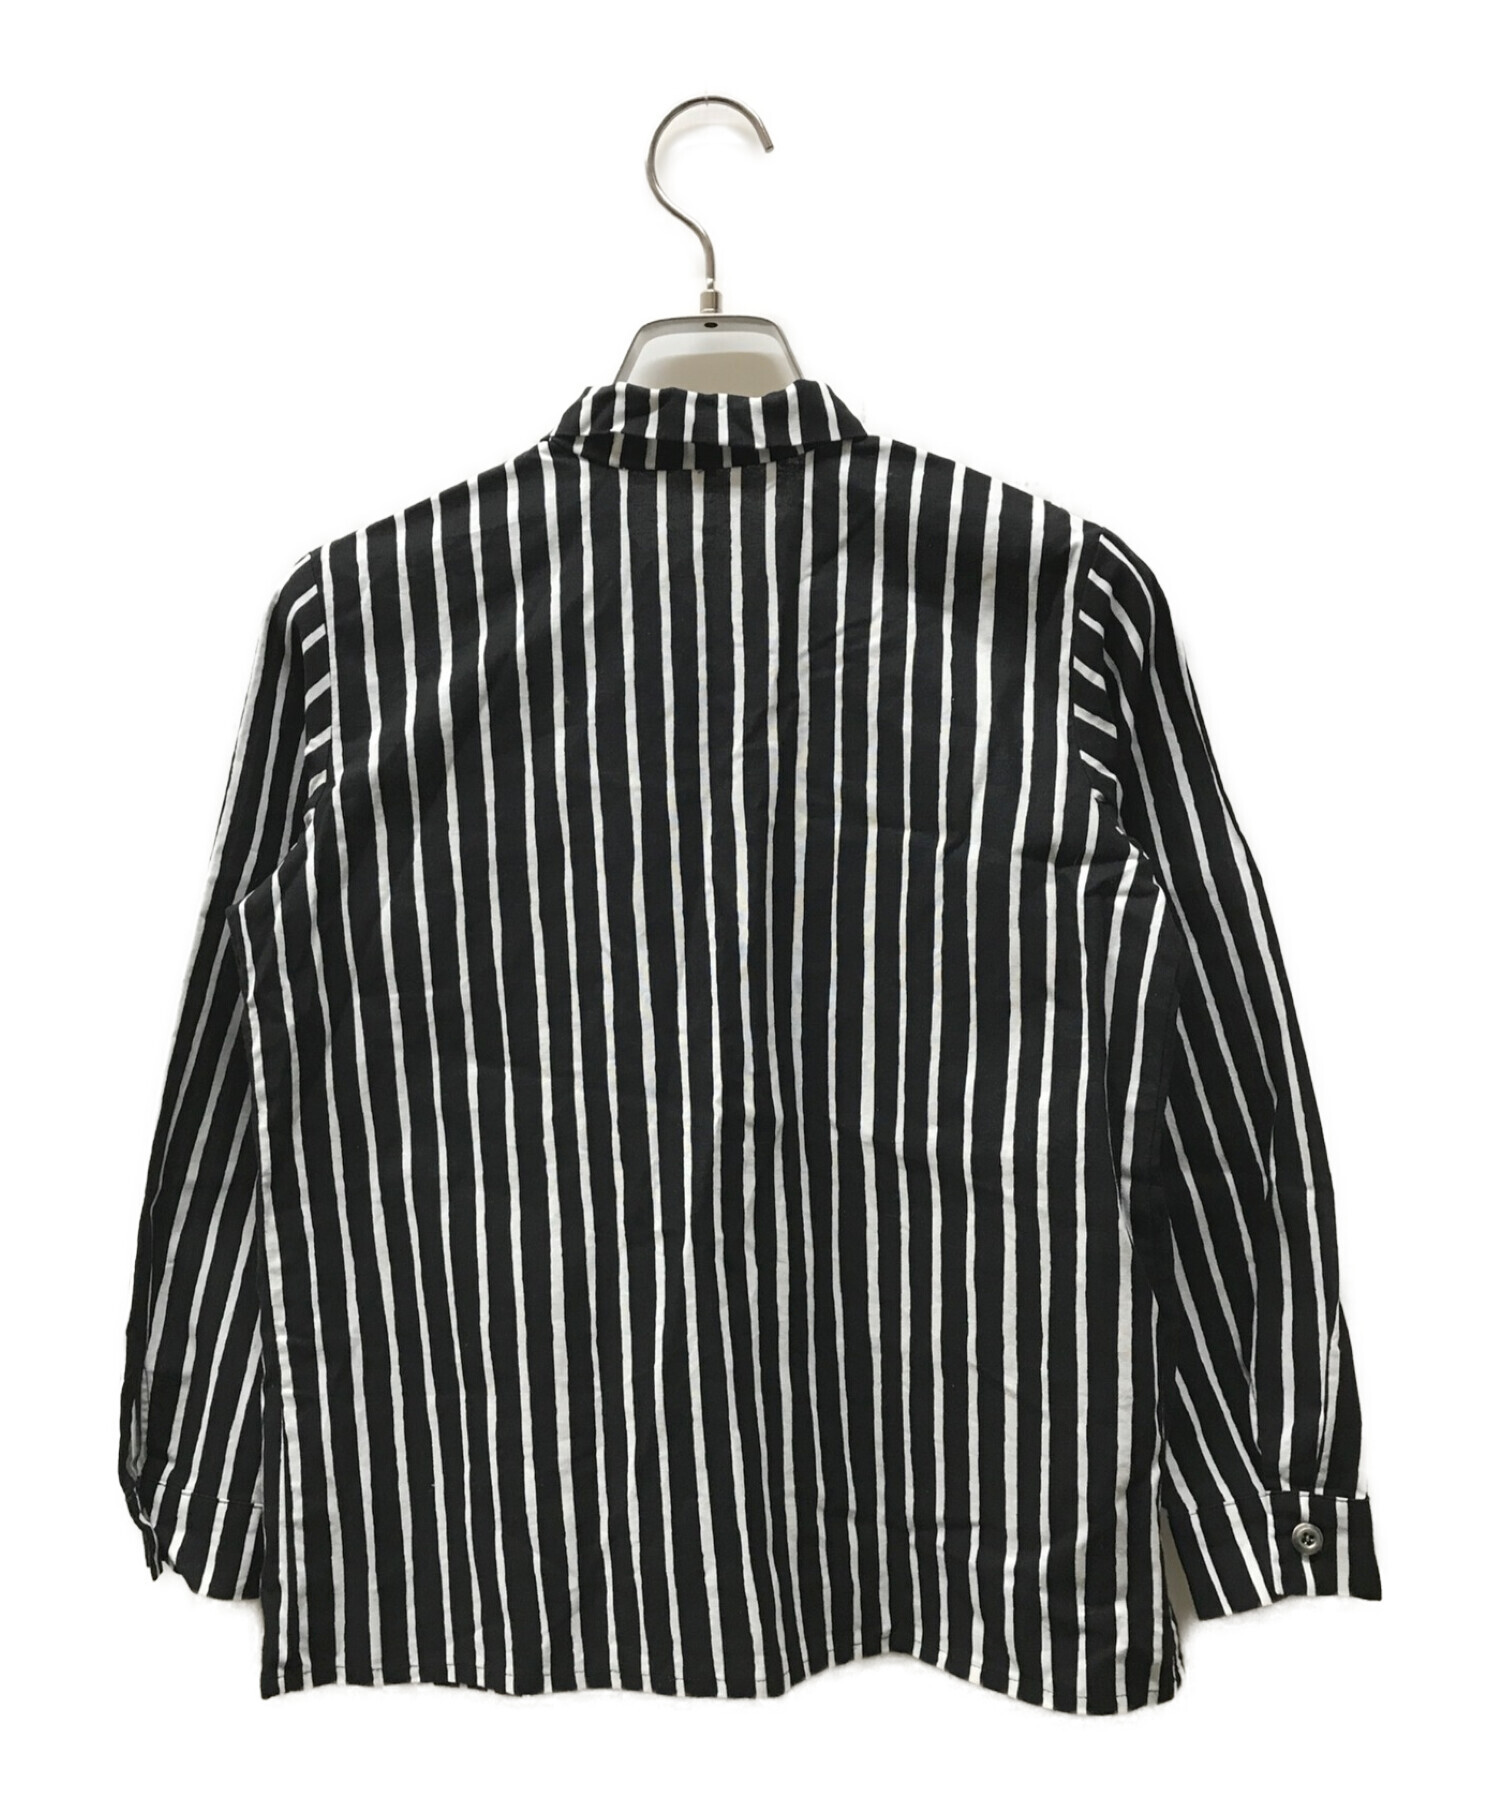 marimekko (マリメッコ) ヨカポイカストライプシャツ ホワイト×ブラック サイズ:128-134